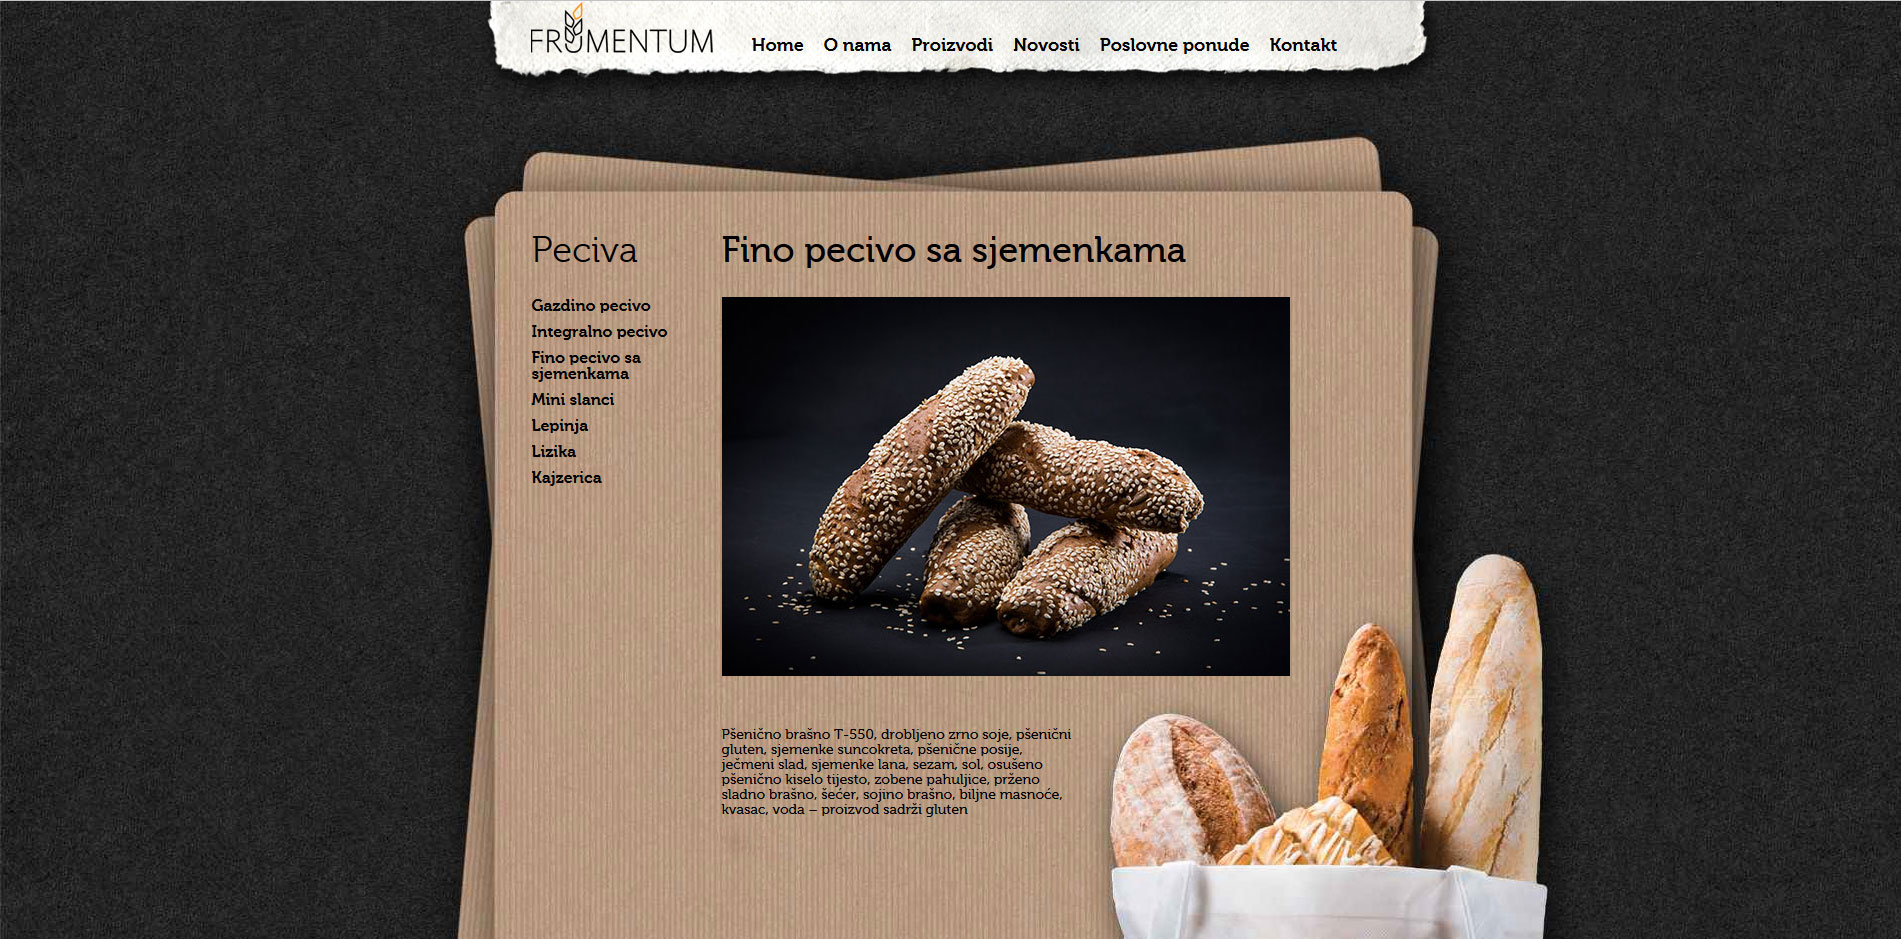 masavukmanovic.com - frumentum bakeries - branding 06